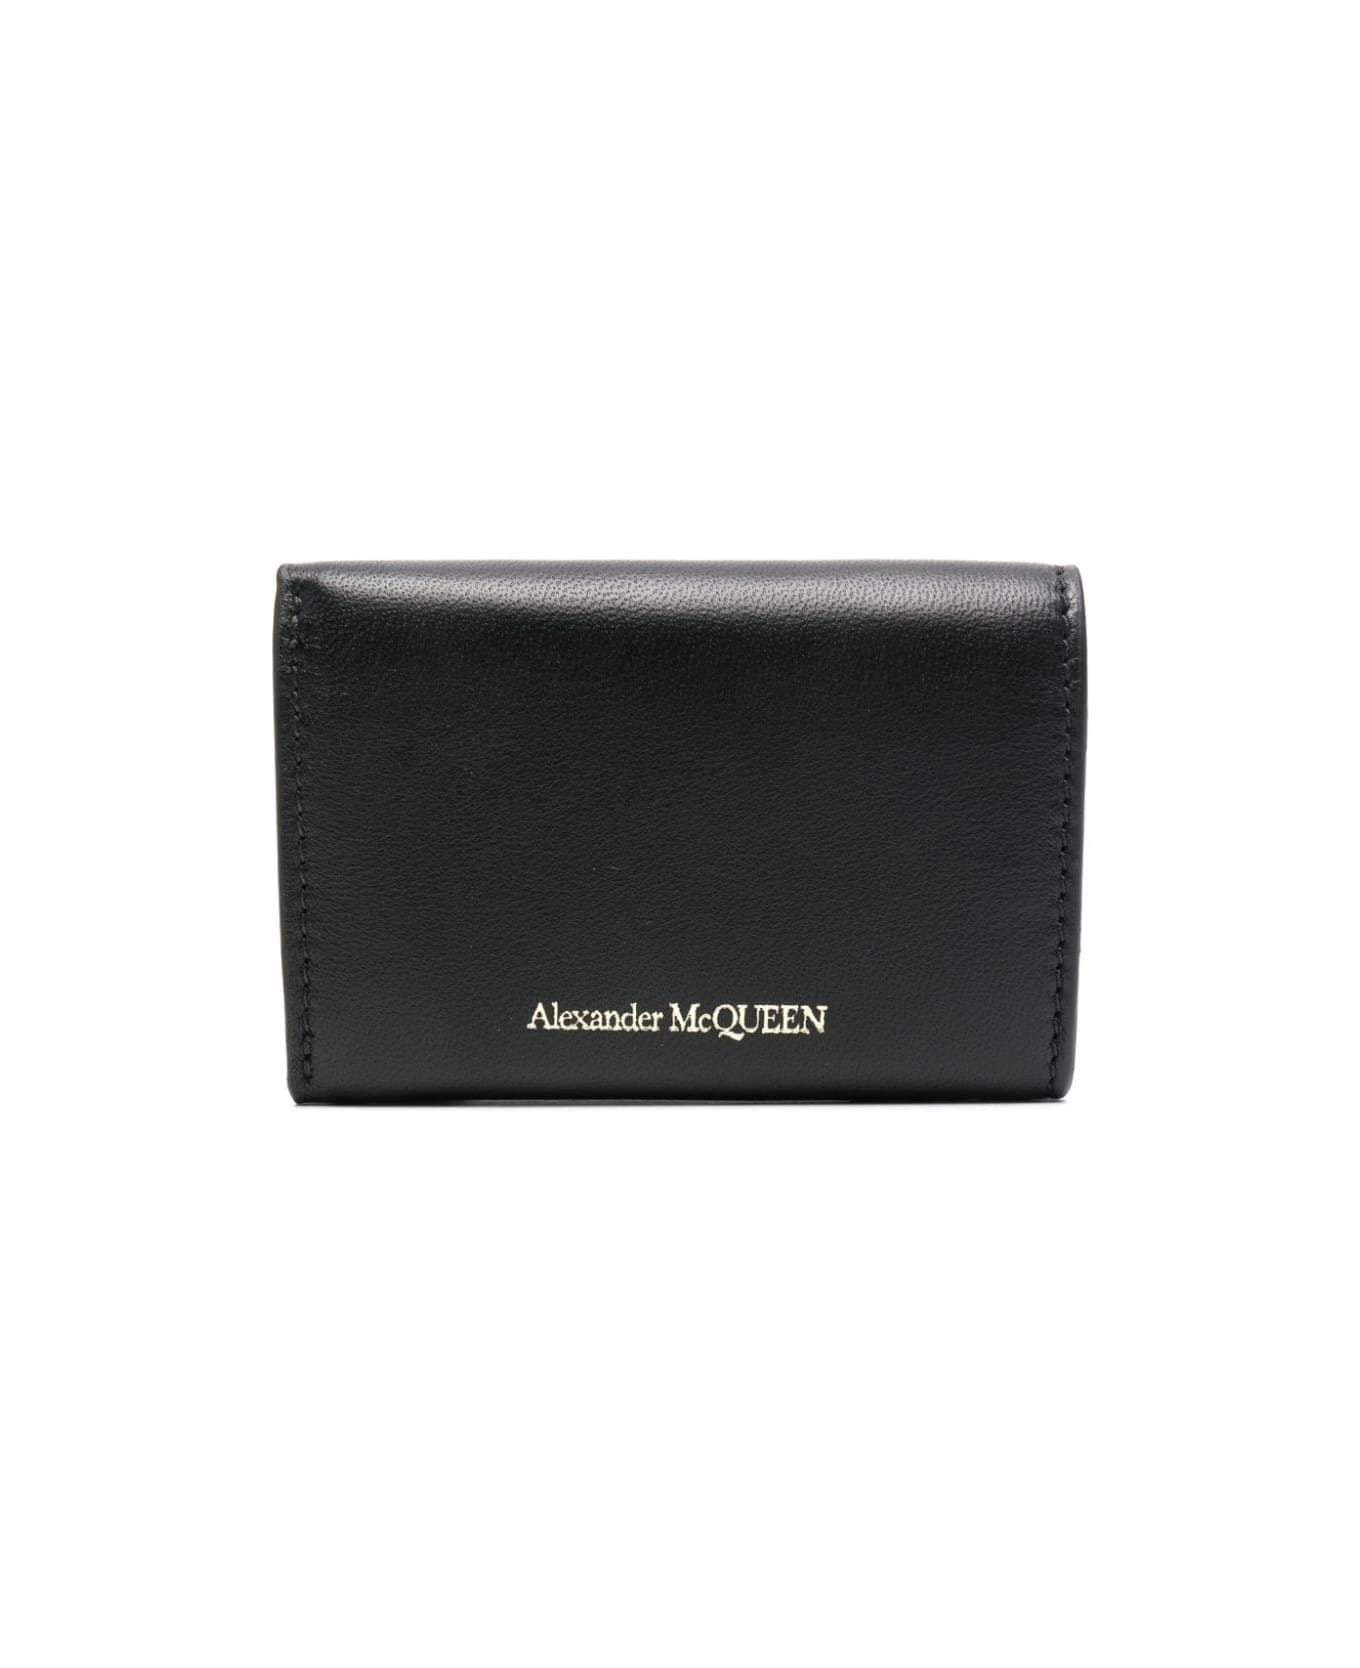 Alexander McQueen Seal Card Holder In Black - Black